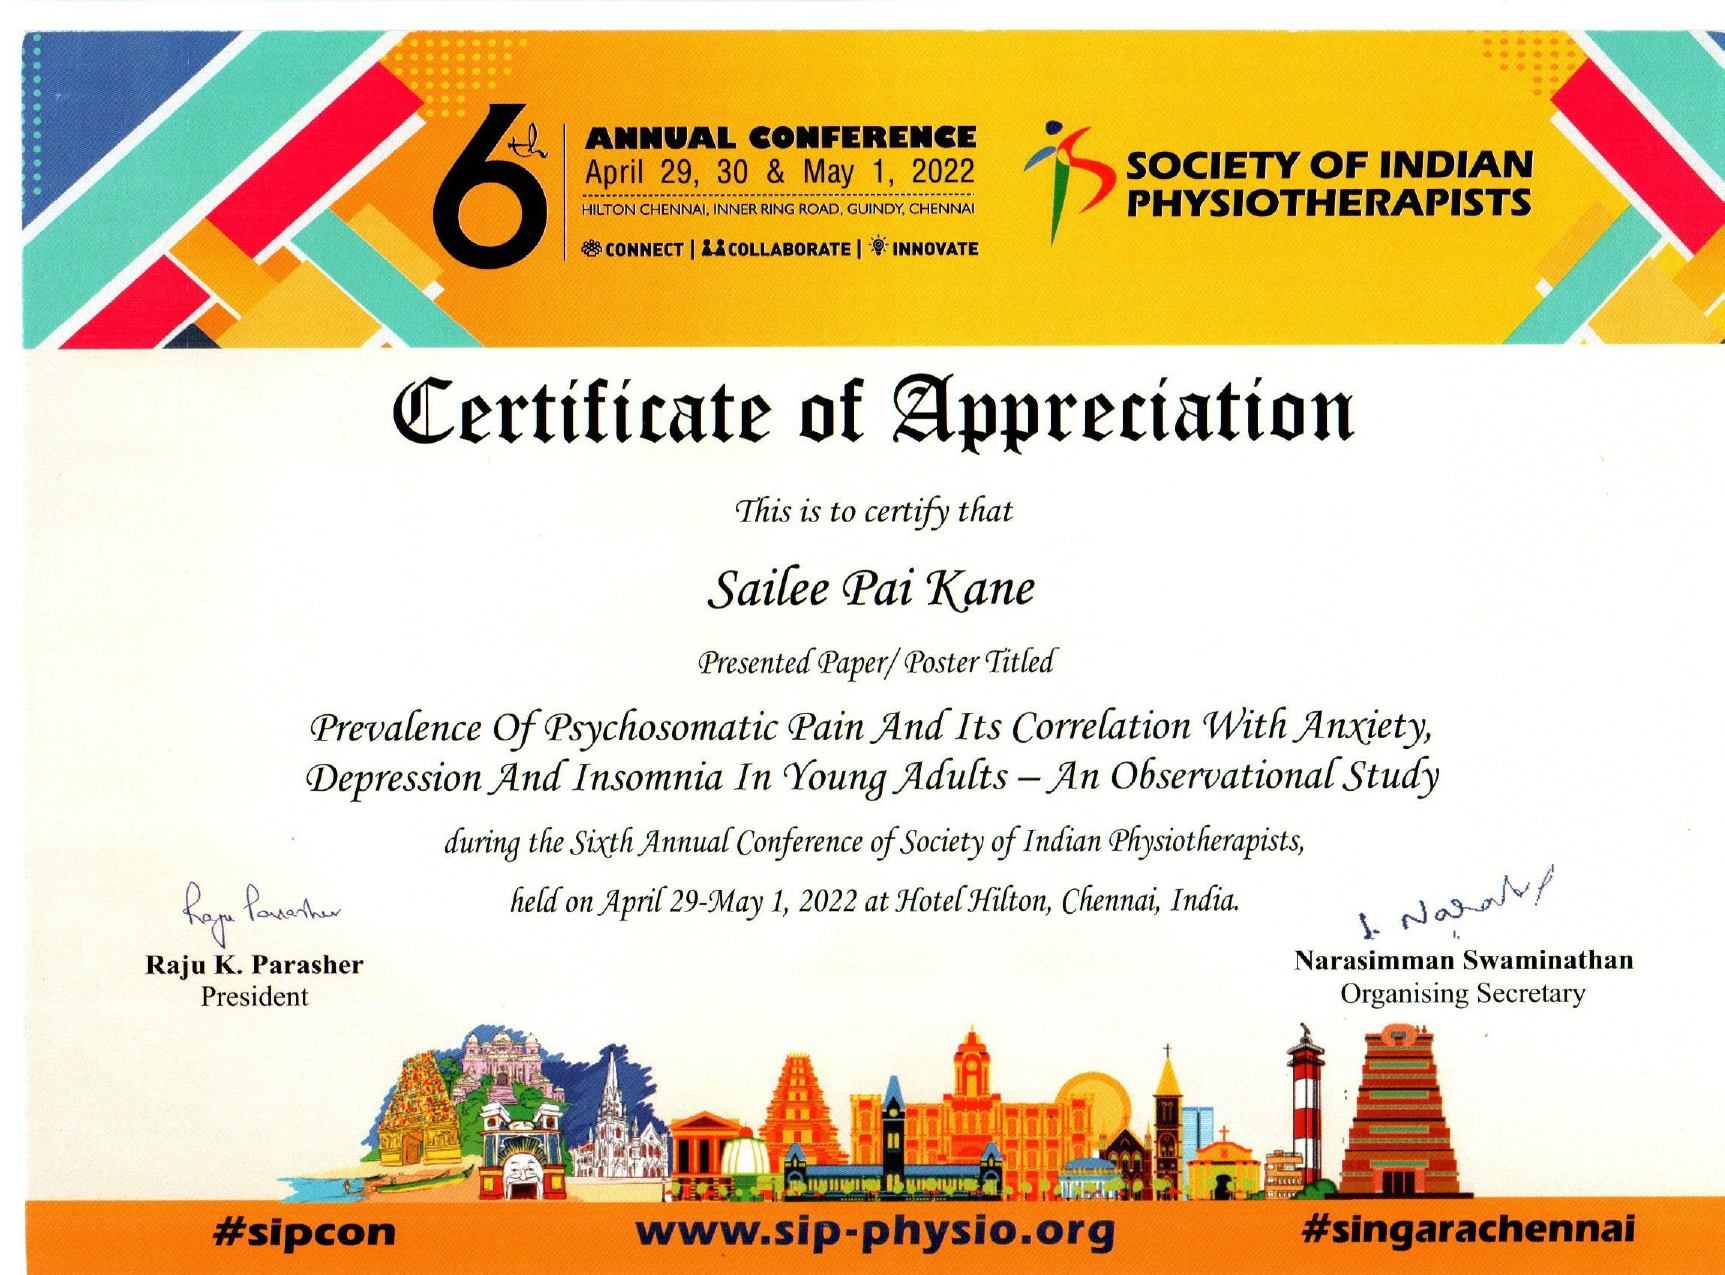 Ms. Sailee Pai Kanse certificate